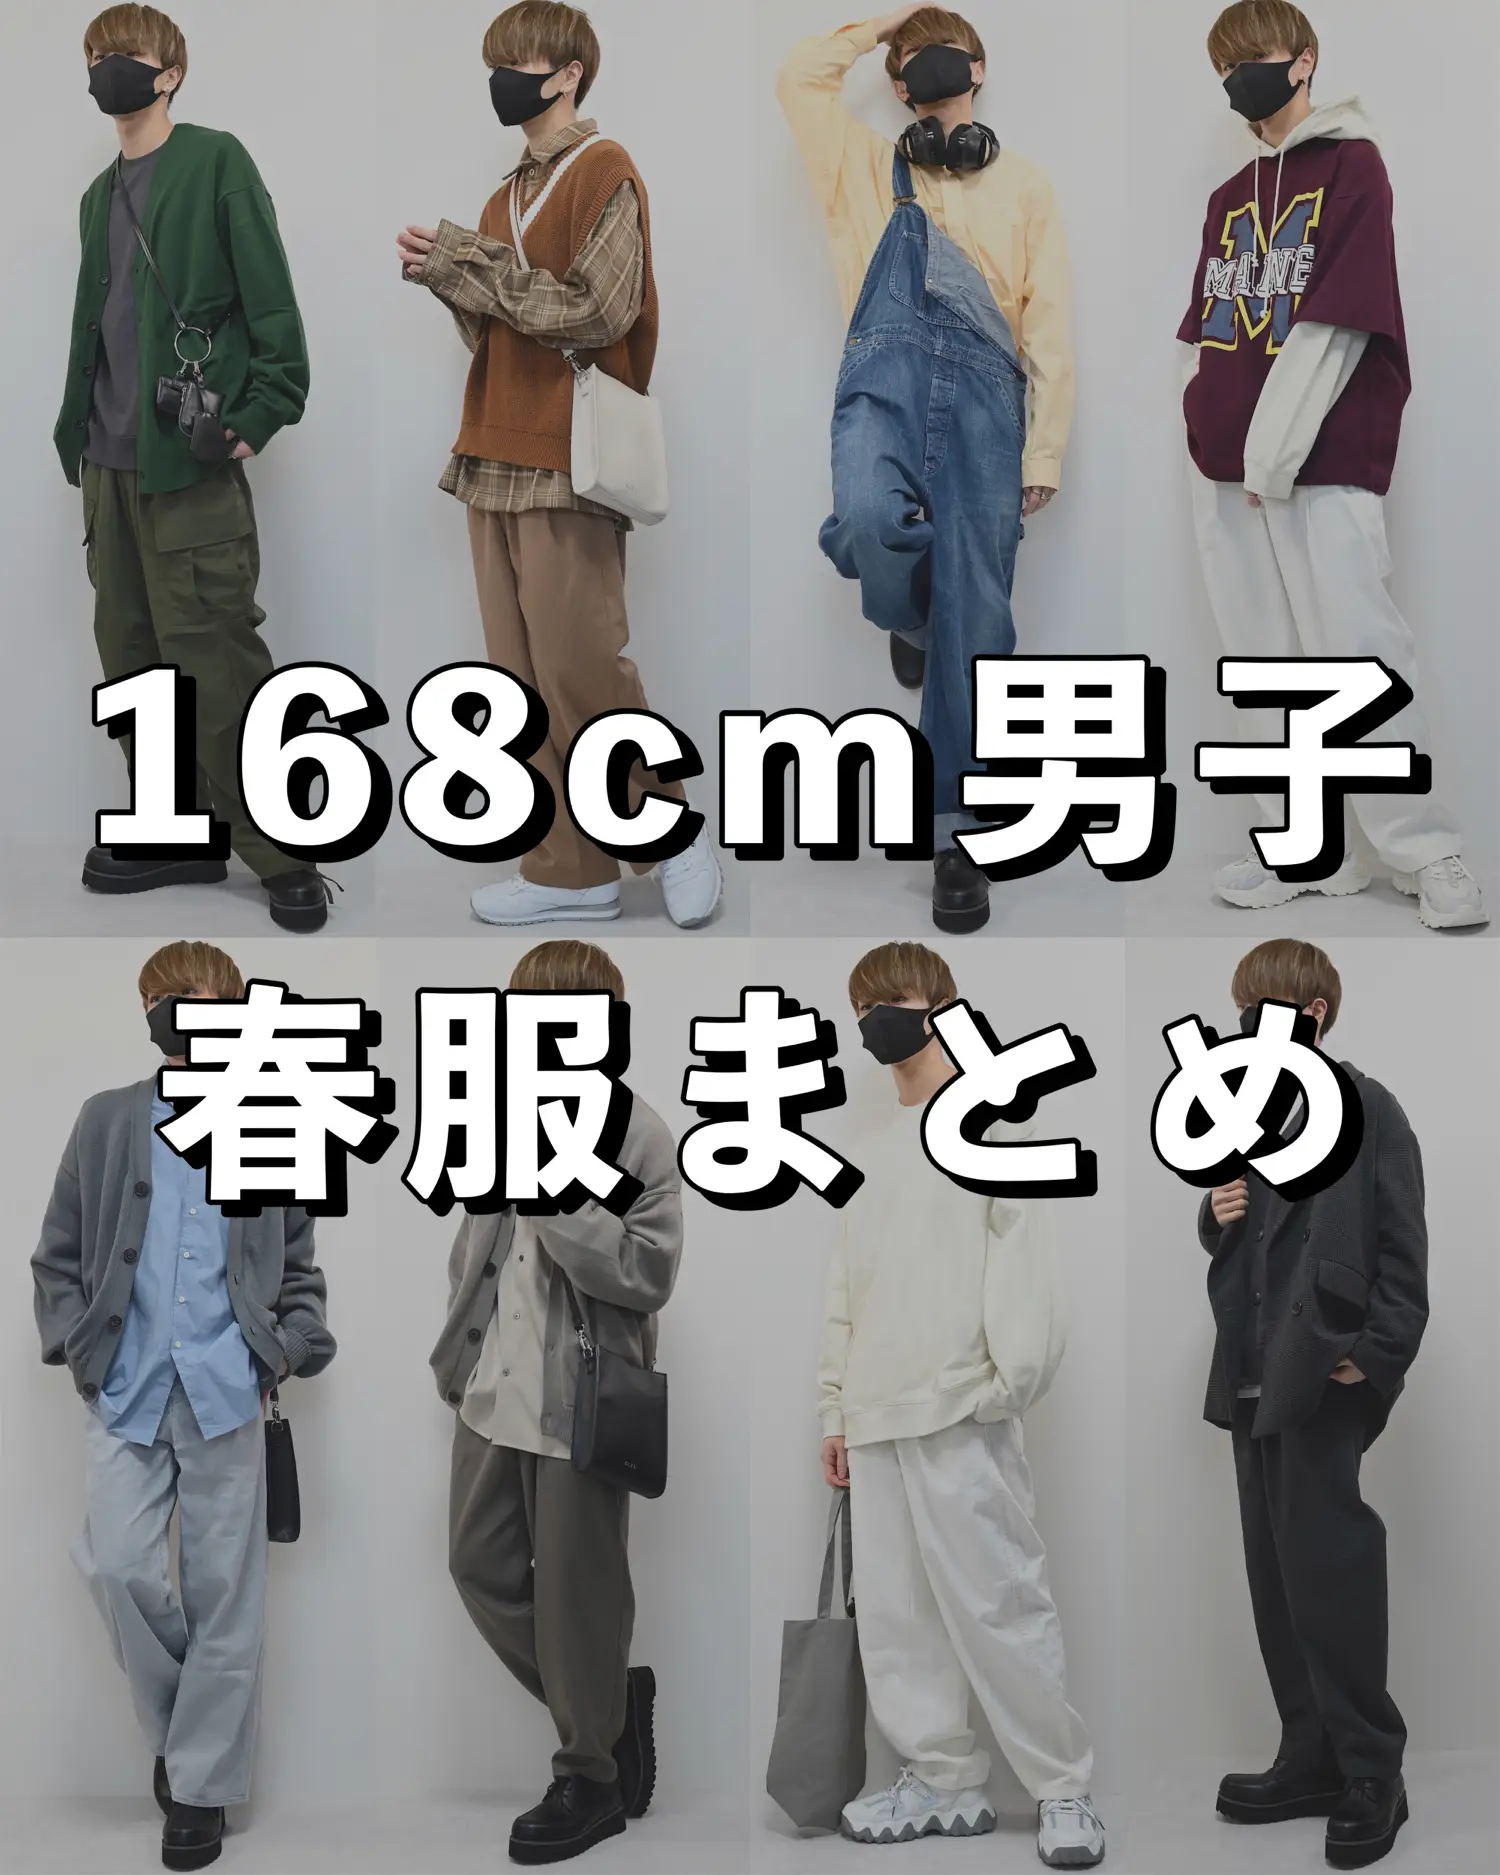 168cm男子 春服まとめ | MASAKIが投稿したフォトブック | Lemon8